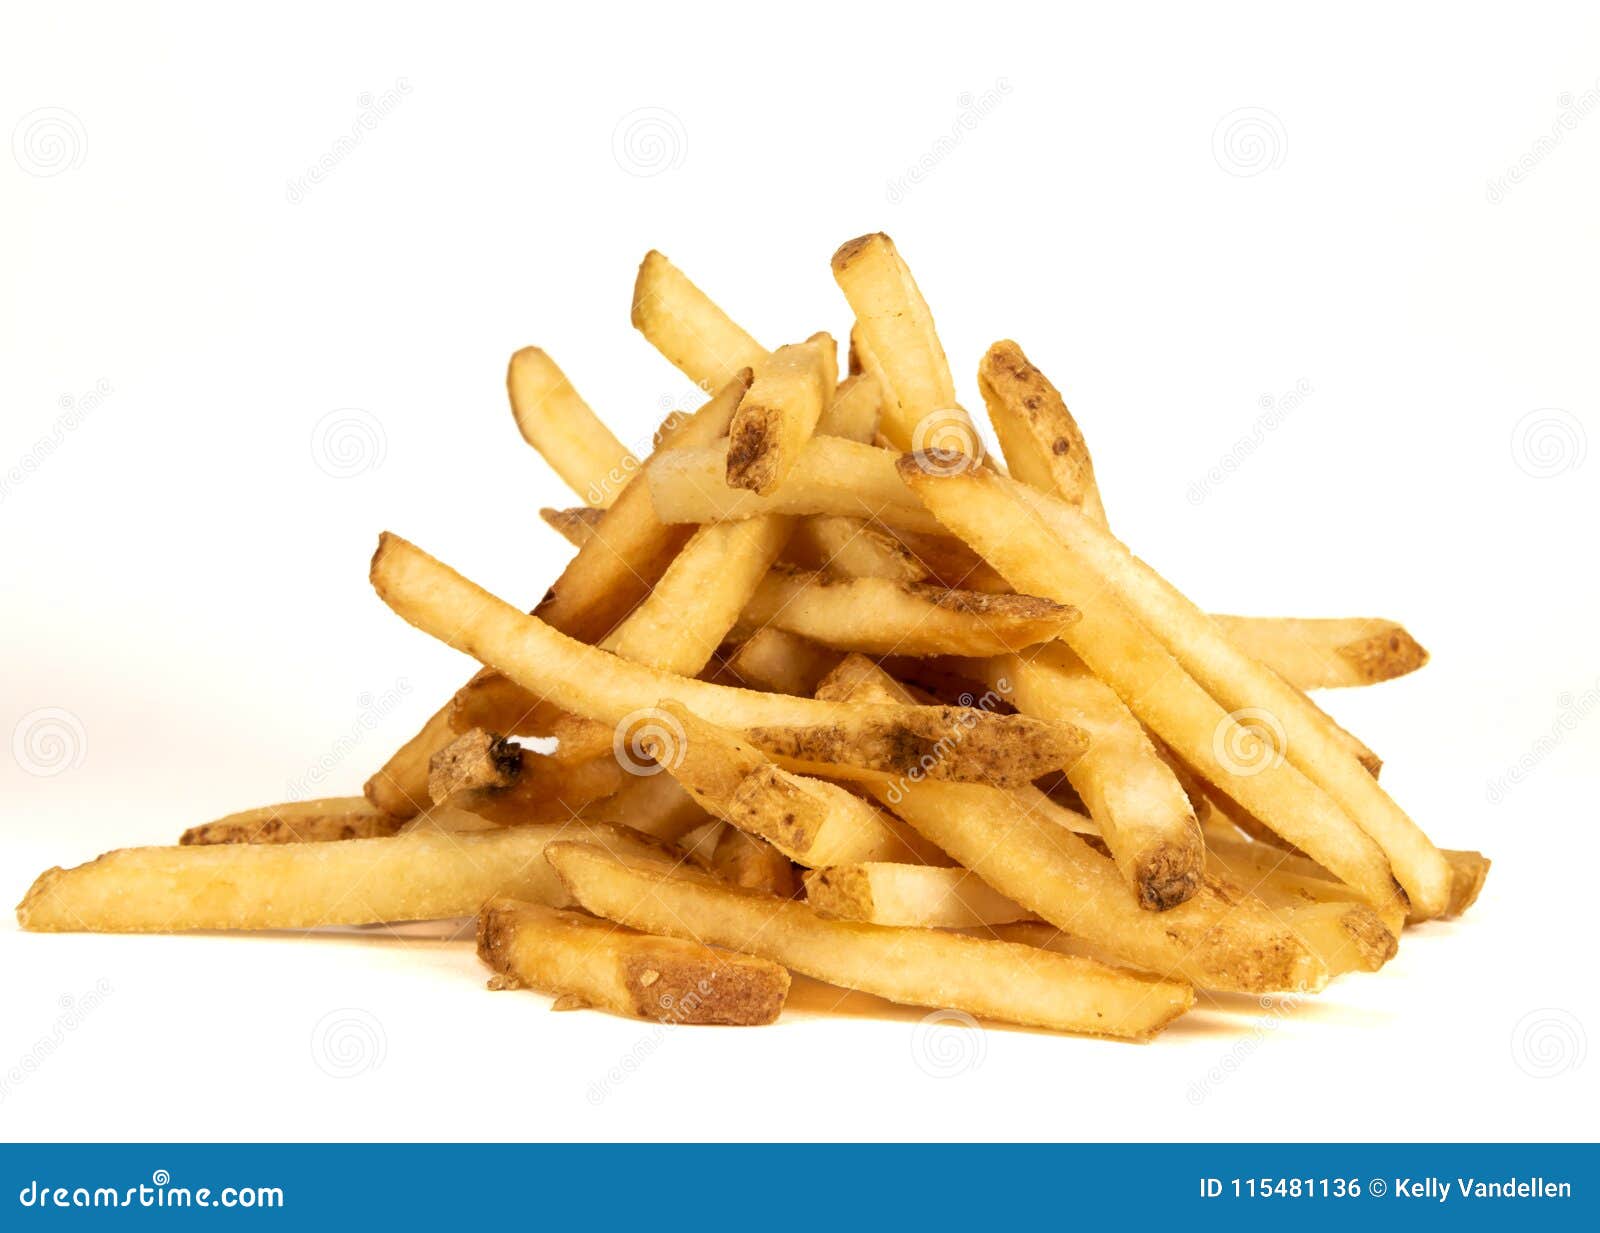 medium pile of fries on white